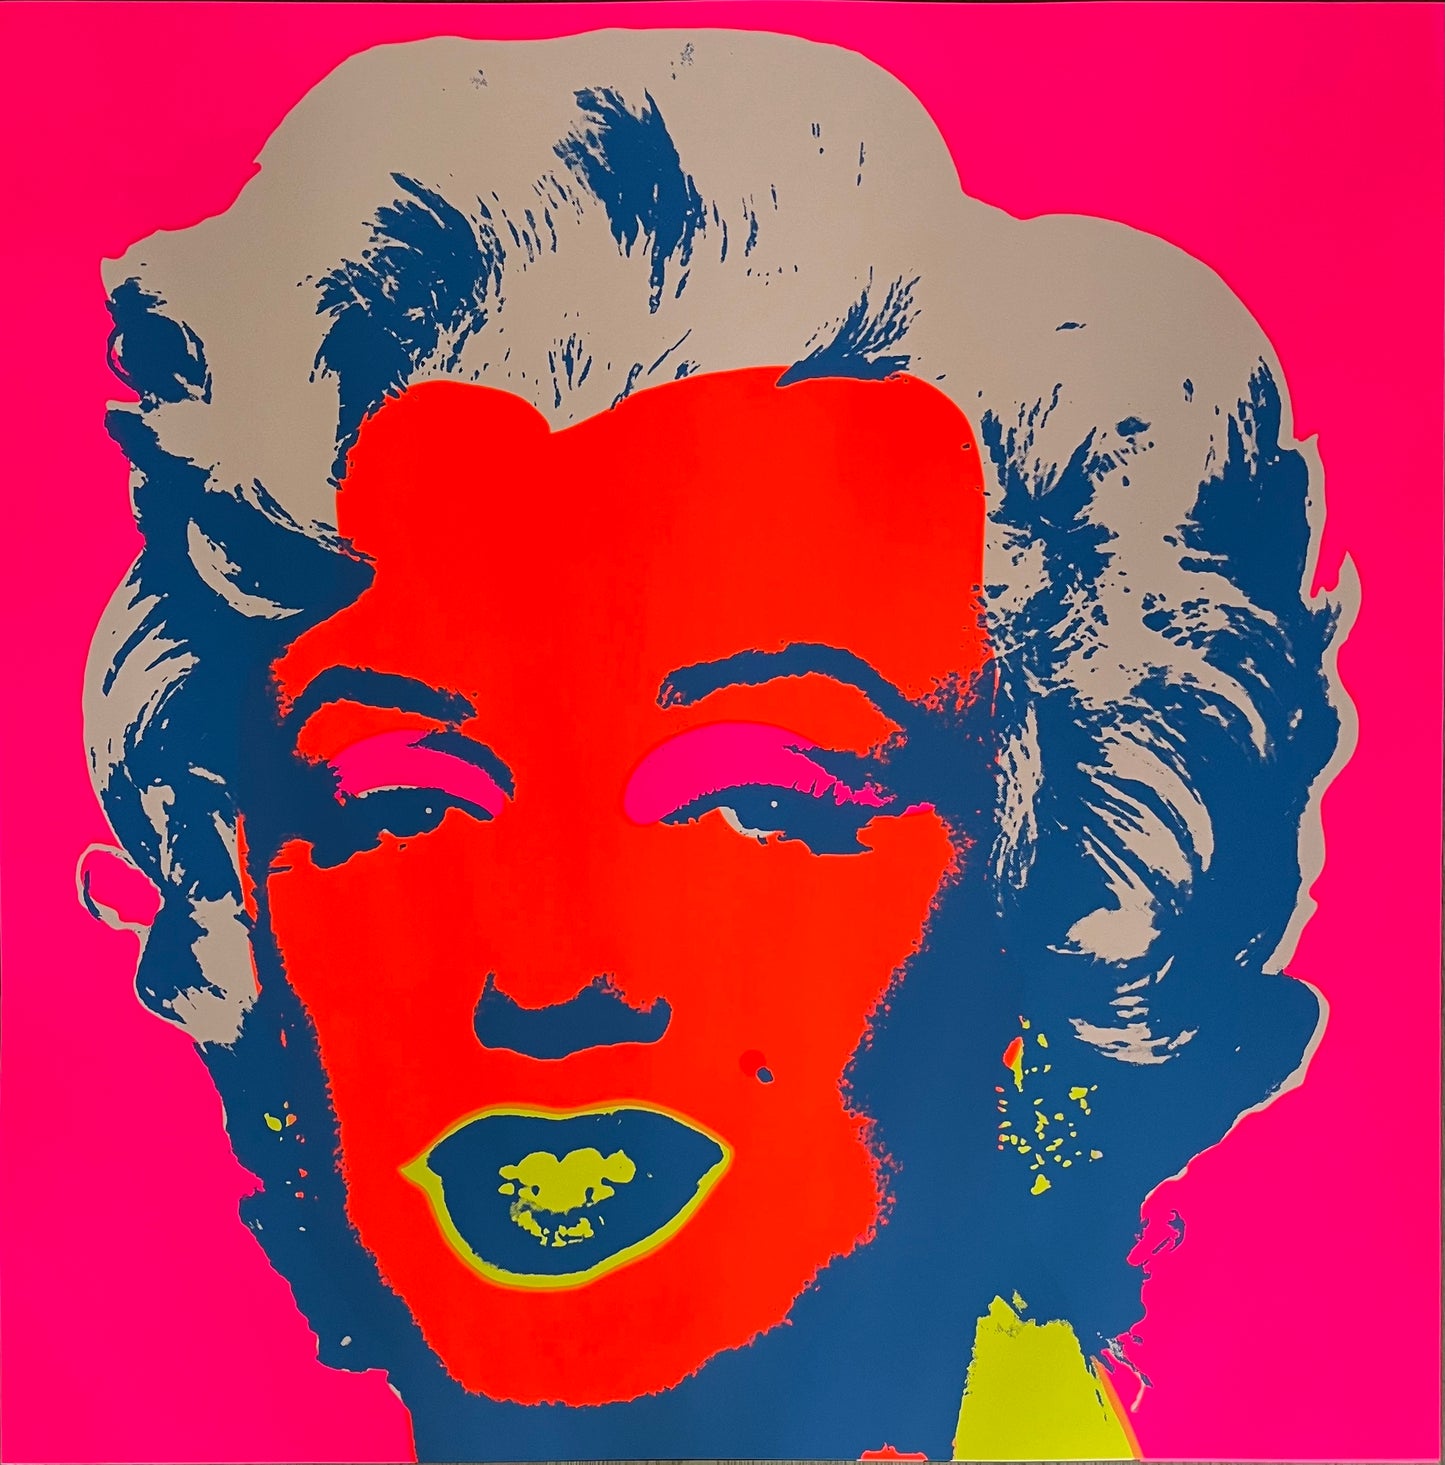 Andy Warhol - Marilyn Monroe - 1980 - Official Screenprint